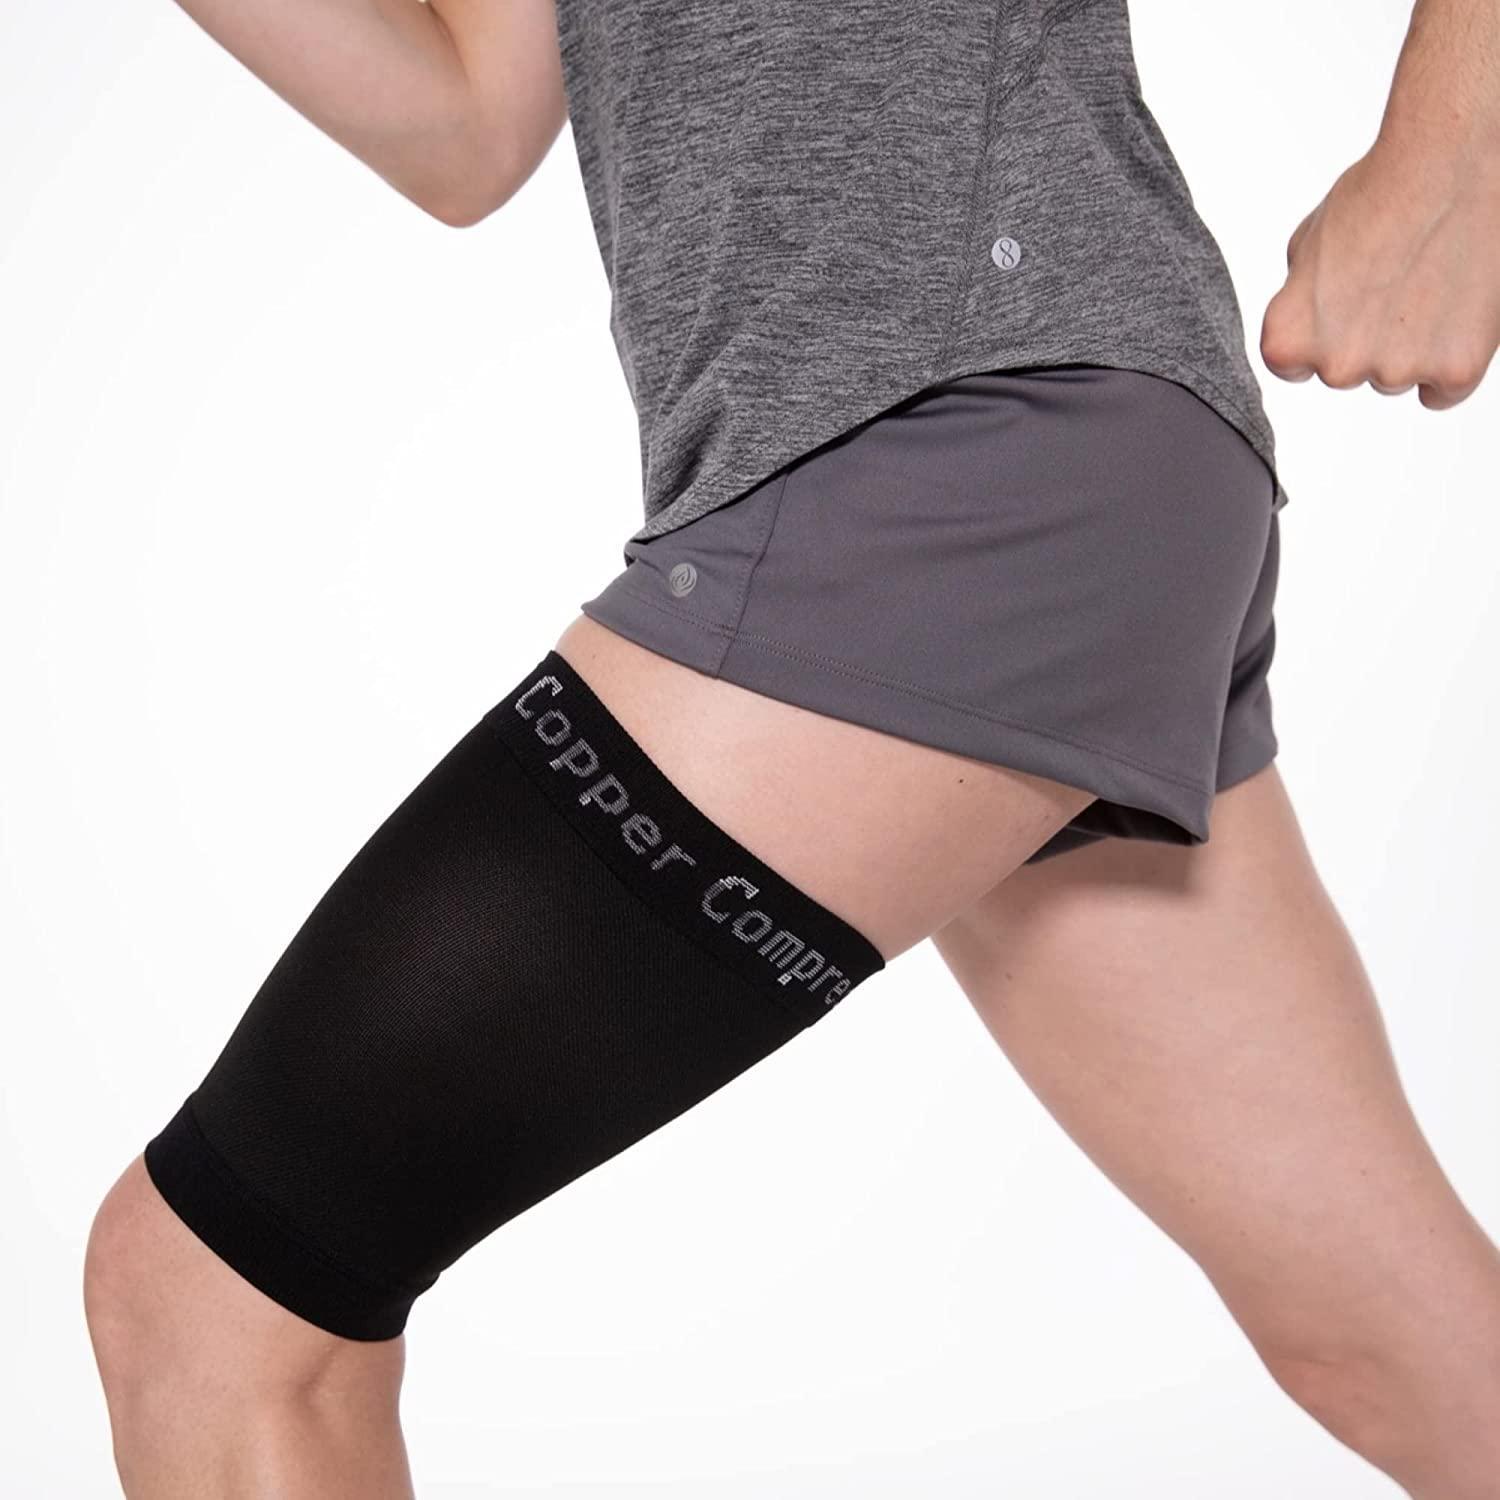 Copper Thigh High Compression Sleeve Leg Quad Hamstring Support Sports Men  Women